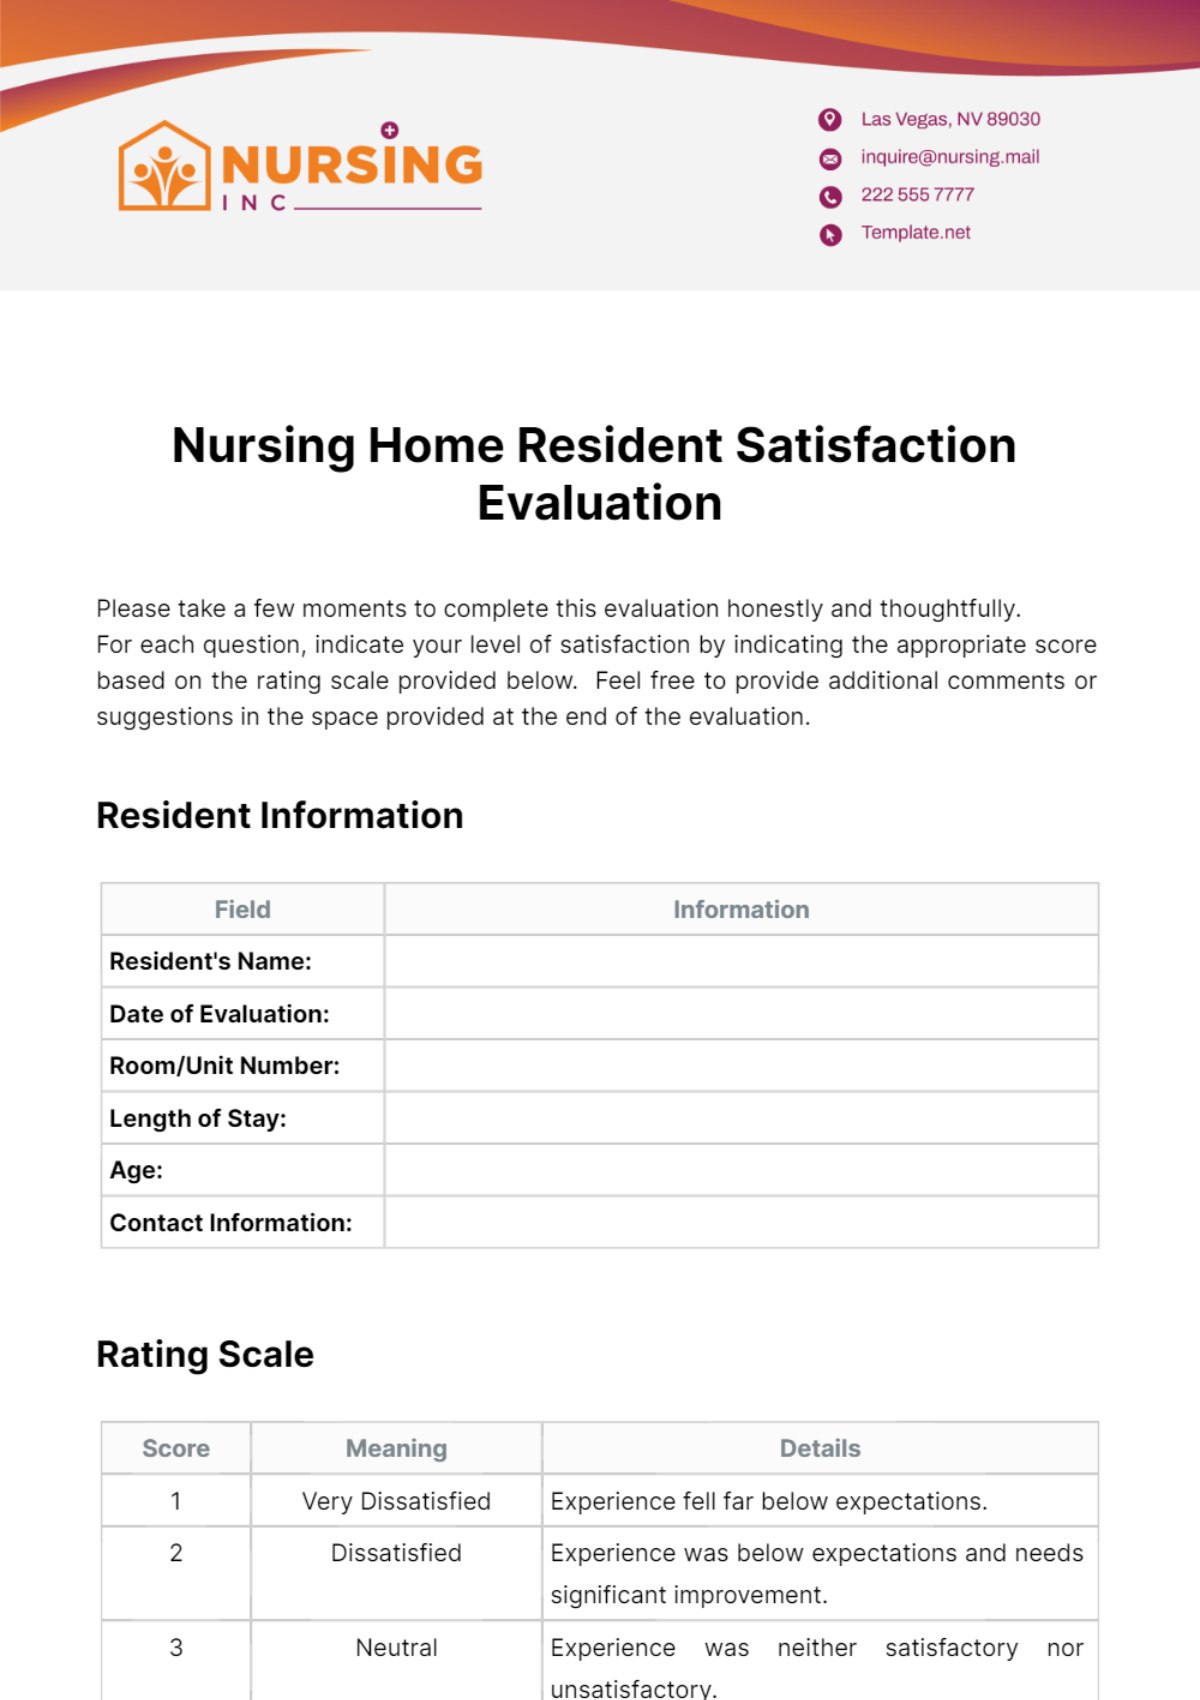 Nursing Home Resident Satisfaction Evaluation Template